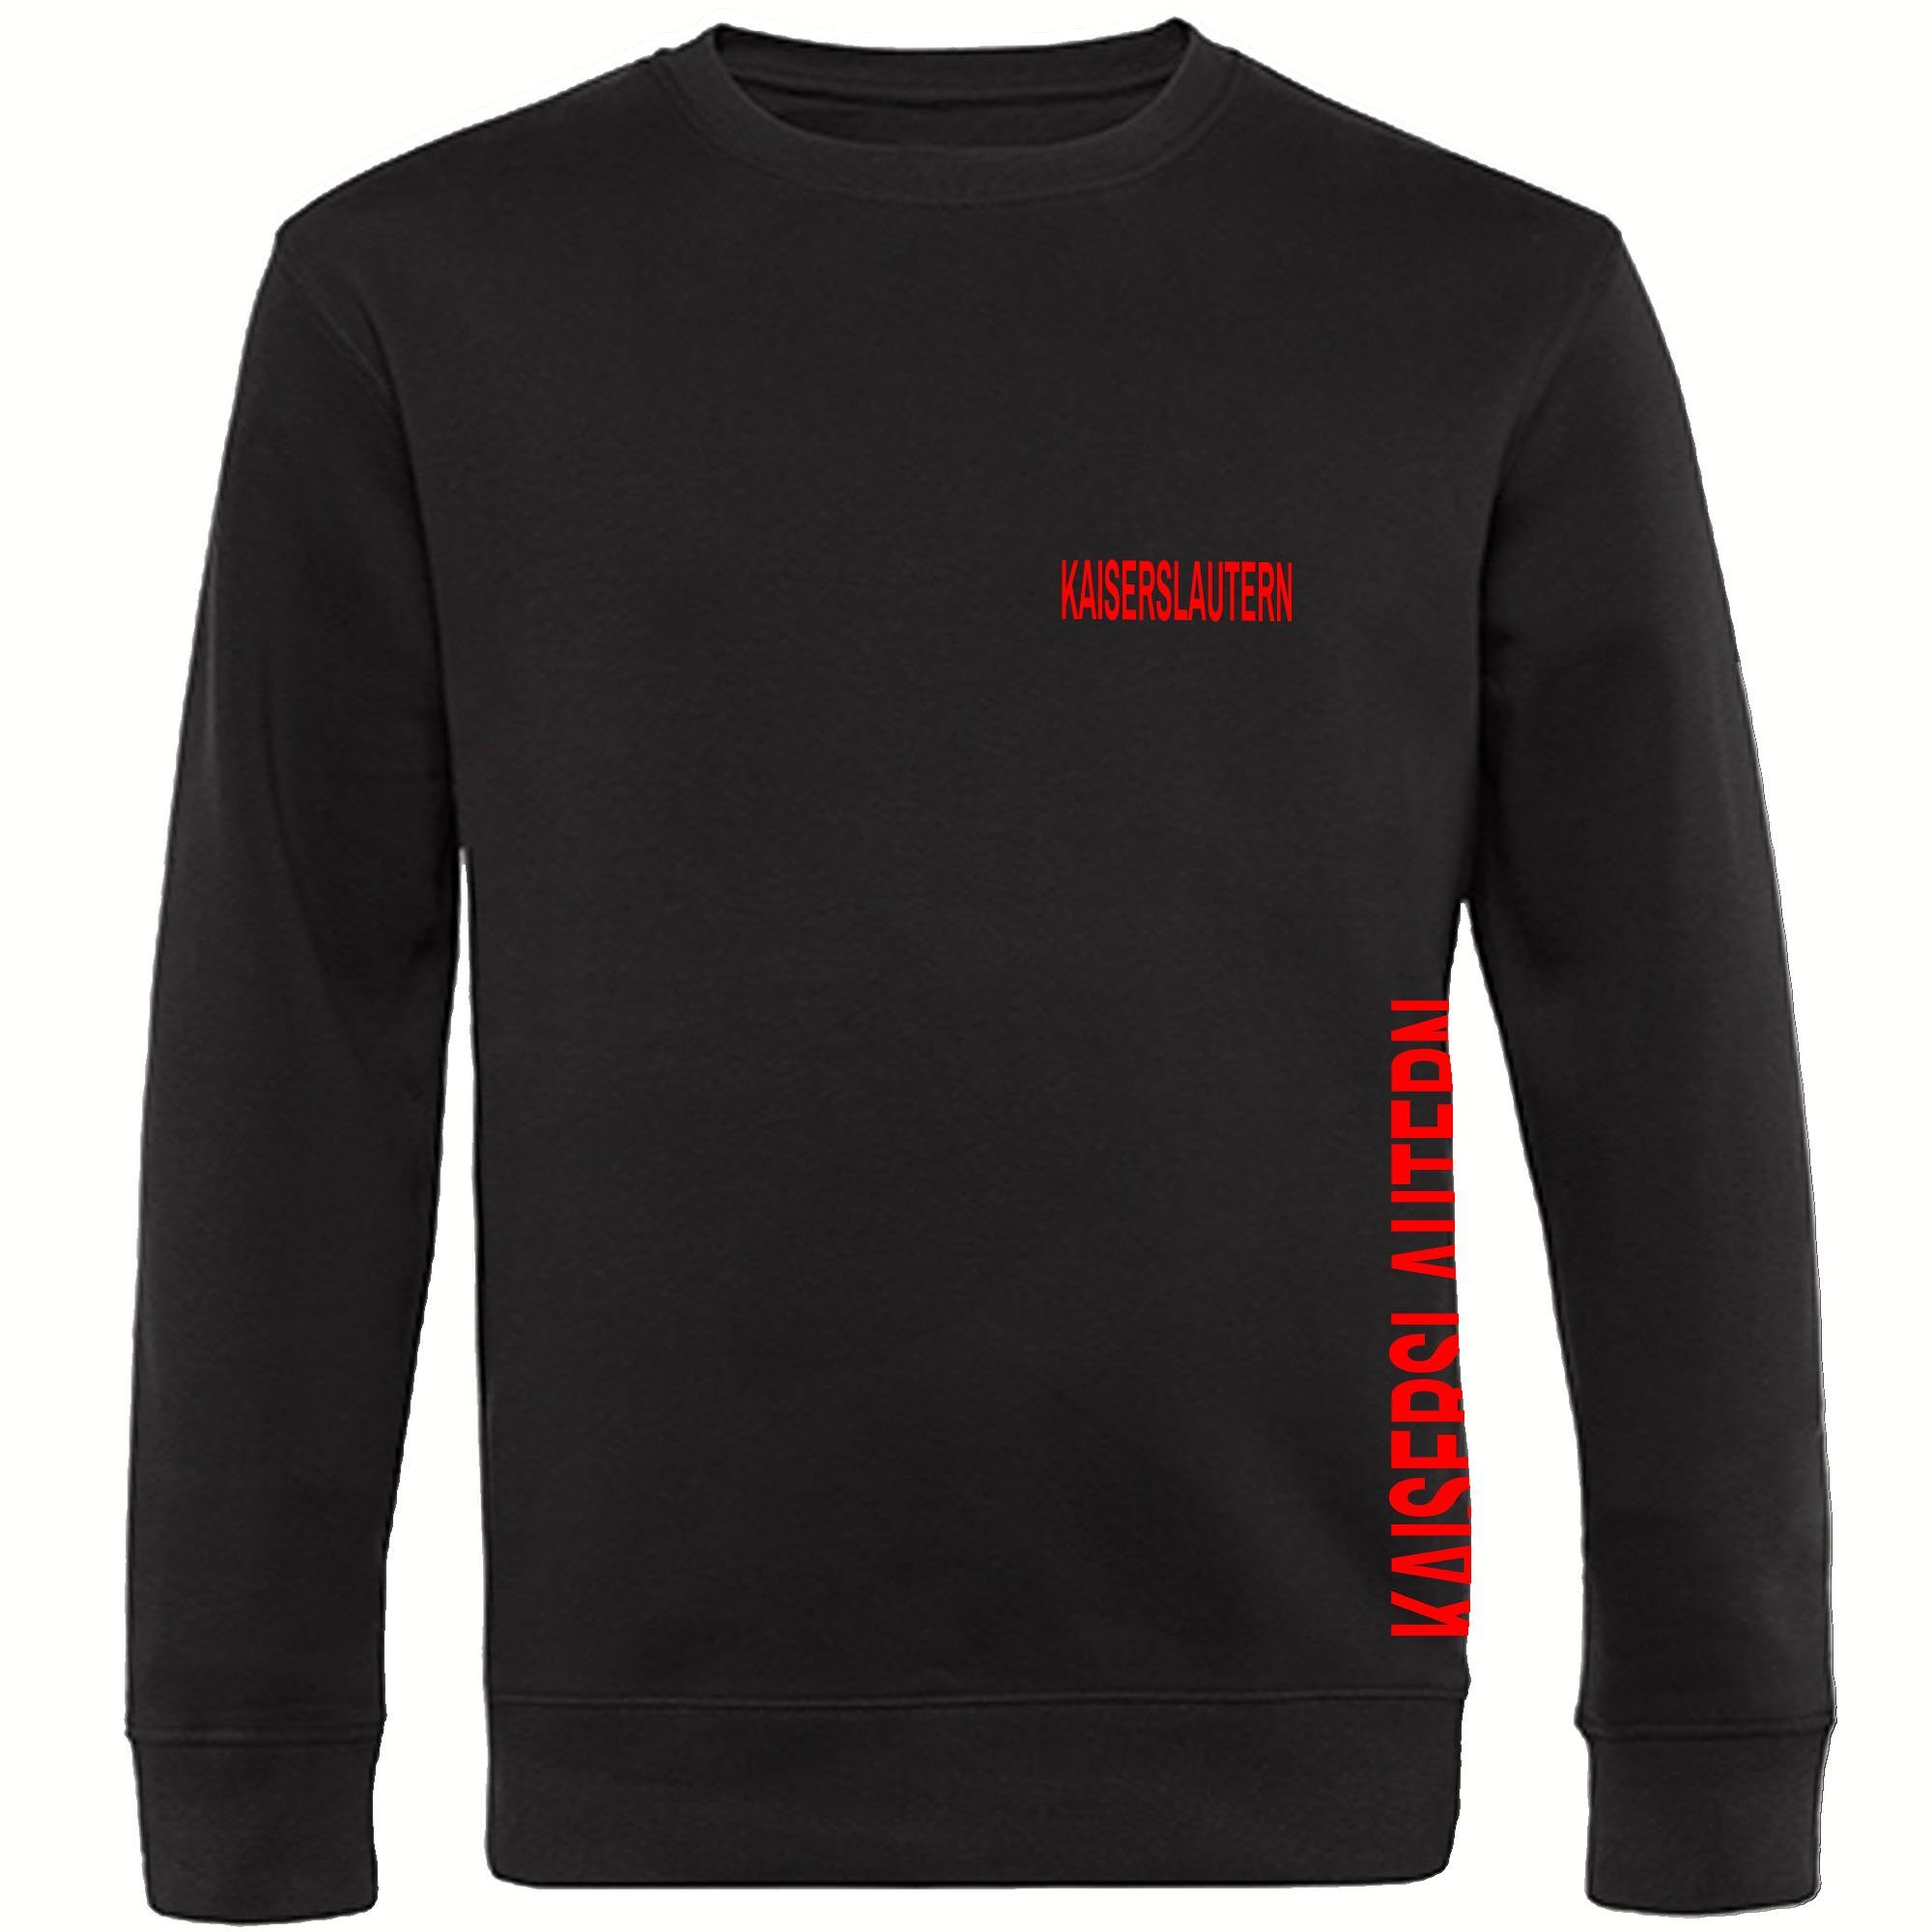 multifanshop Sweatshirt Kaiserslautern - Brust & Seite - Pullover